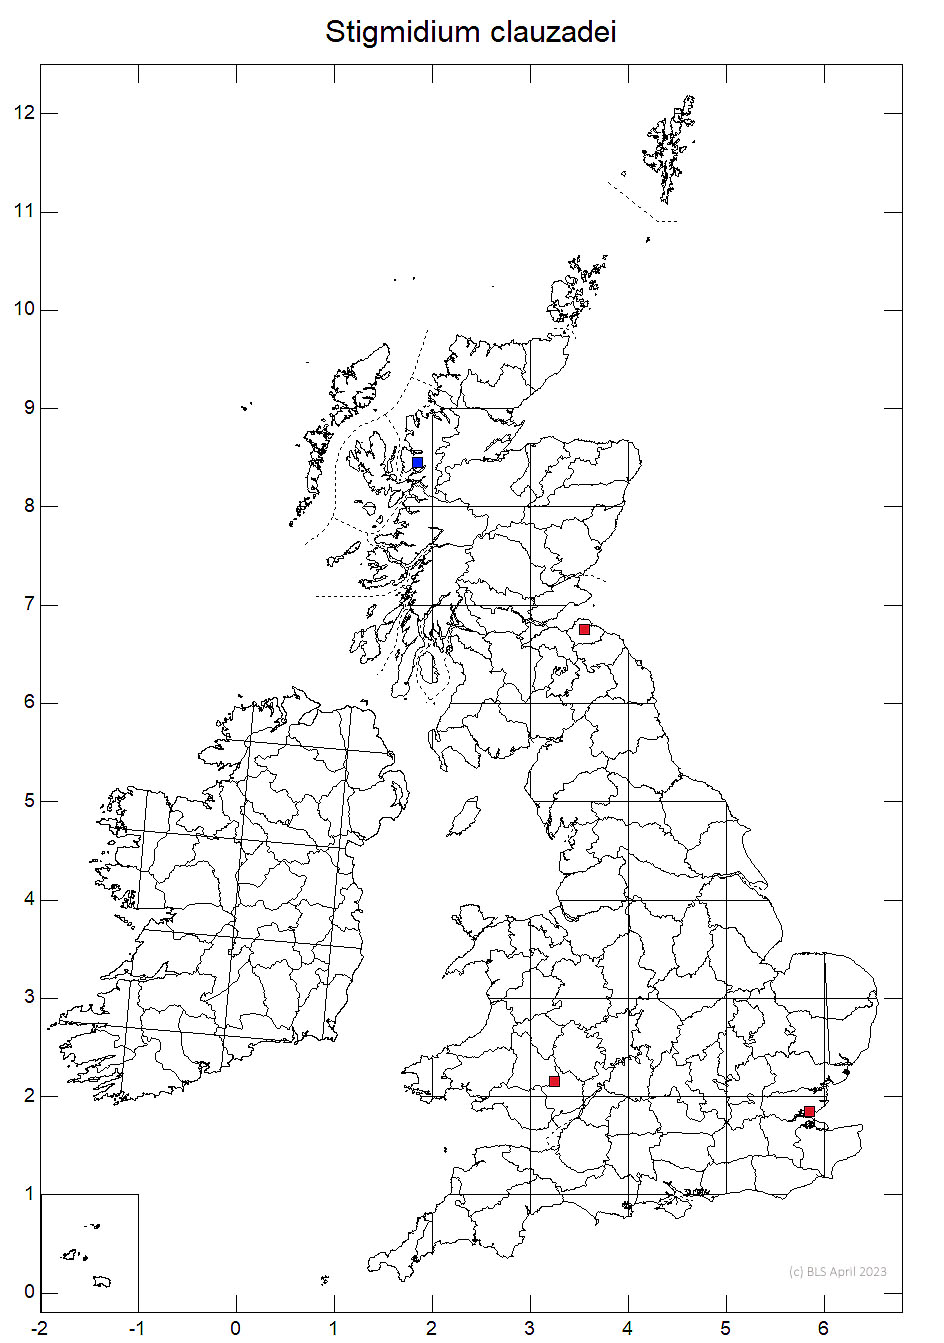 Stigmidium clauzadei 10km sq distribution map